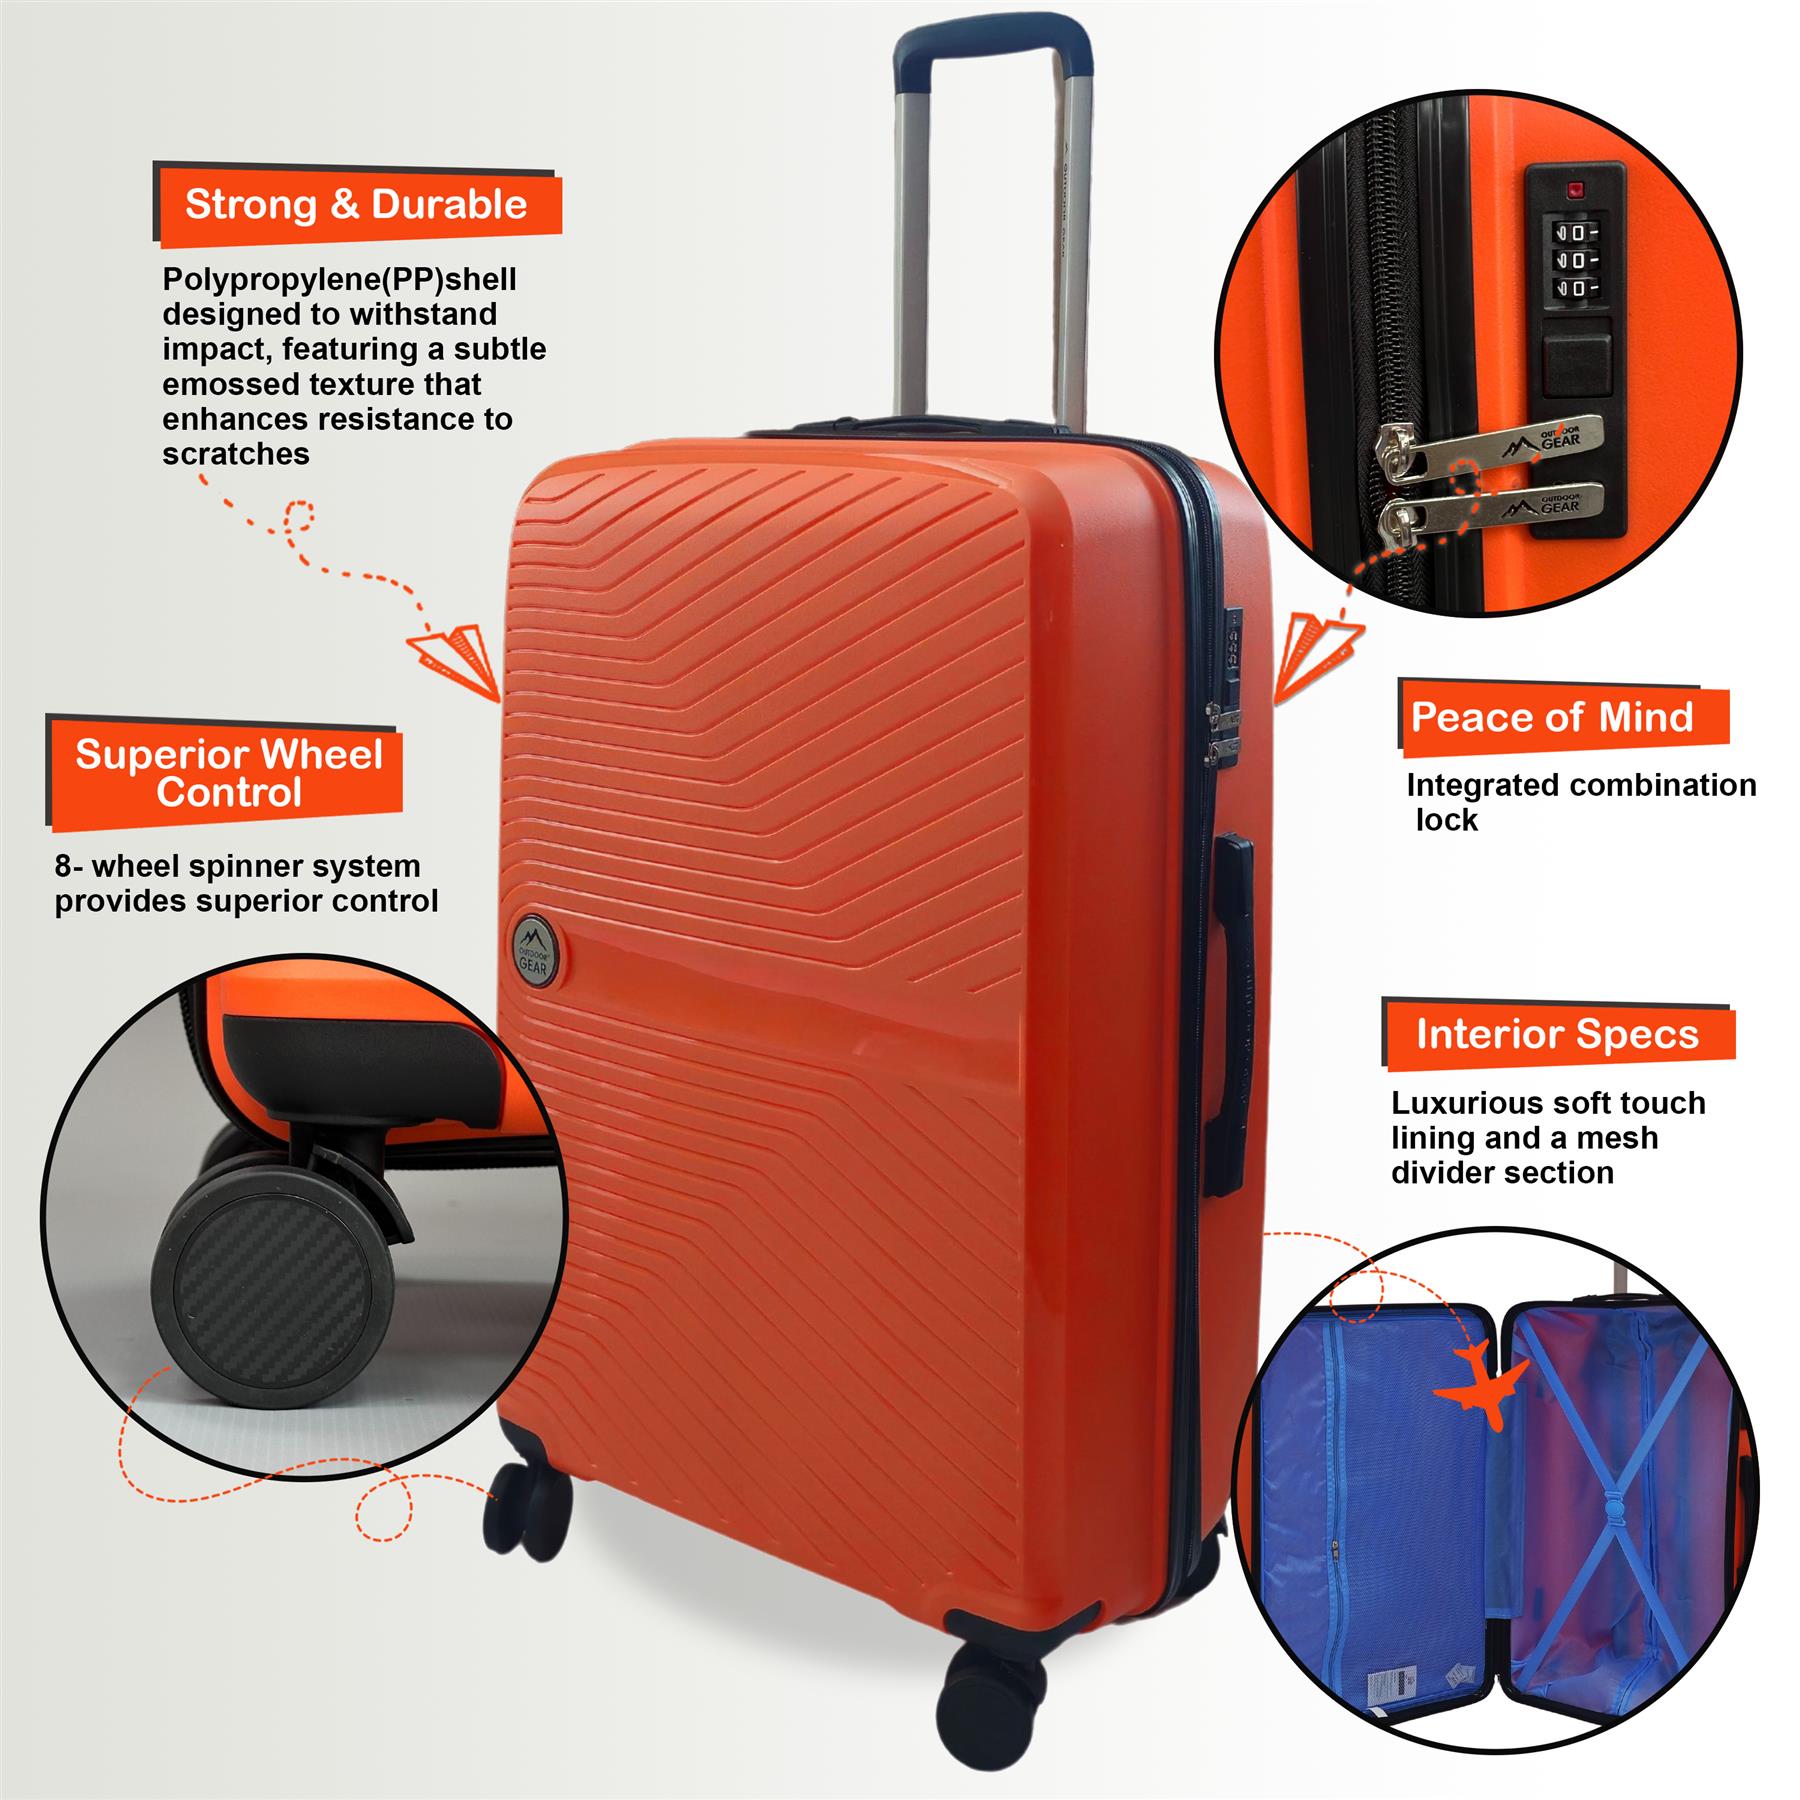 Abbeville Cabin Hard Shell Suitcase in Orange